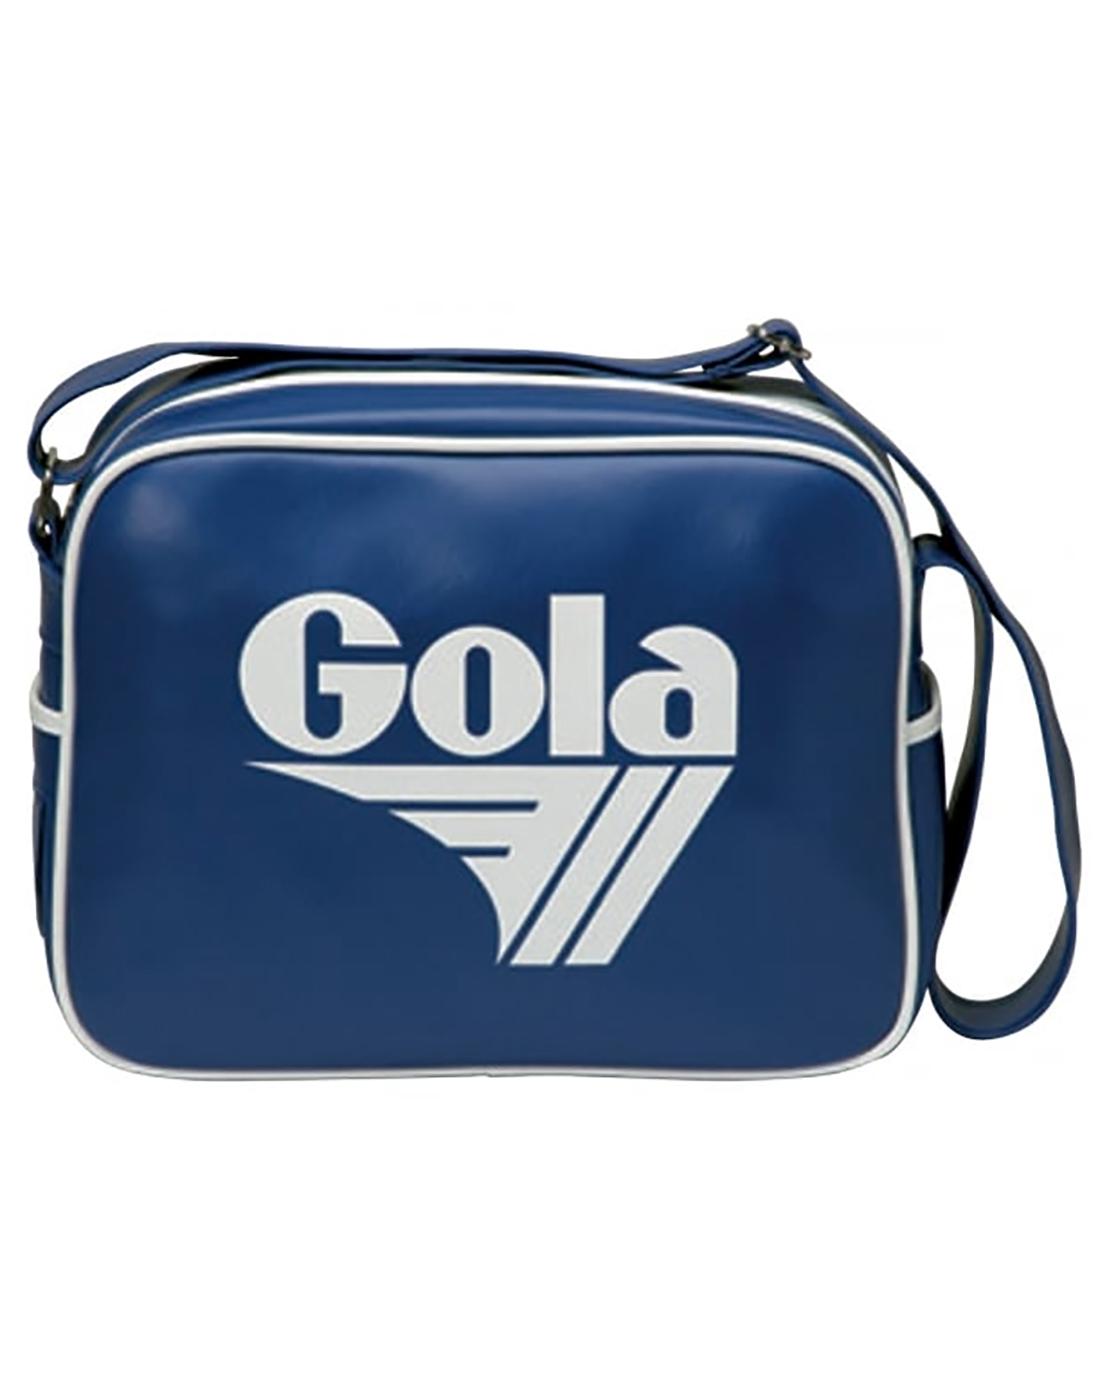 GOLA Redford Retro 70s Shoulder Bag in Reflex Blue